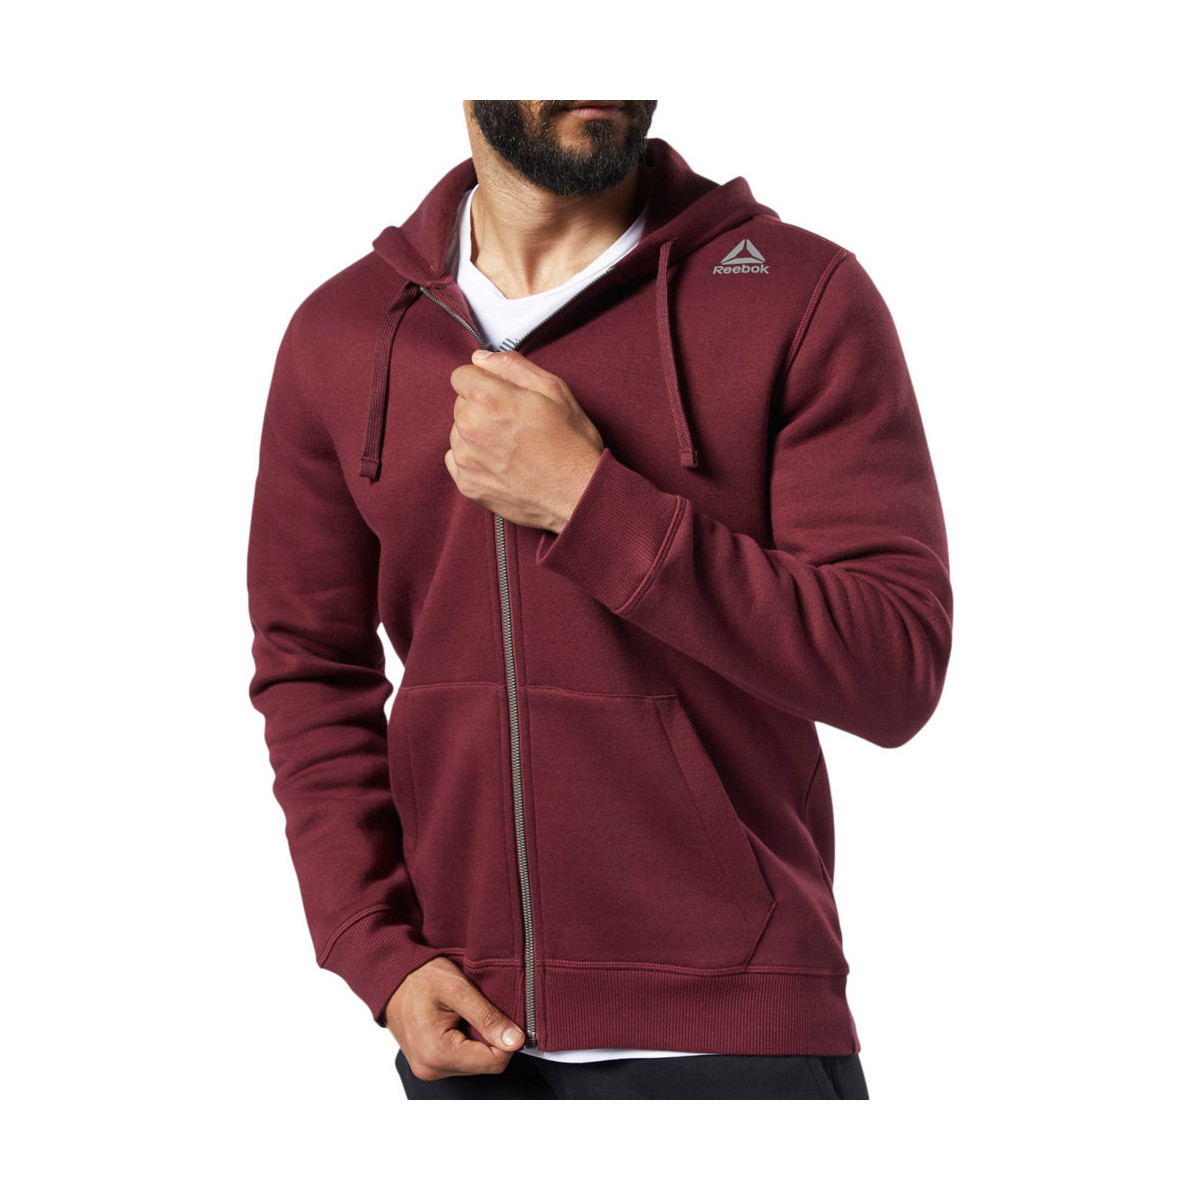 Textiel Heren Sweaters / Sweatshirts Reebok Sport  Rood